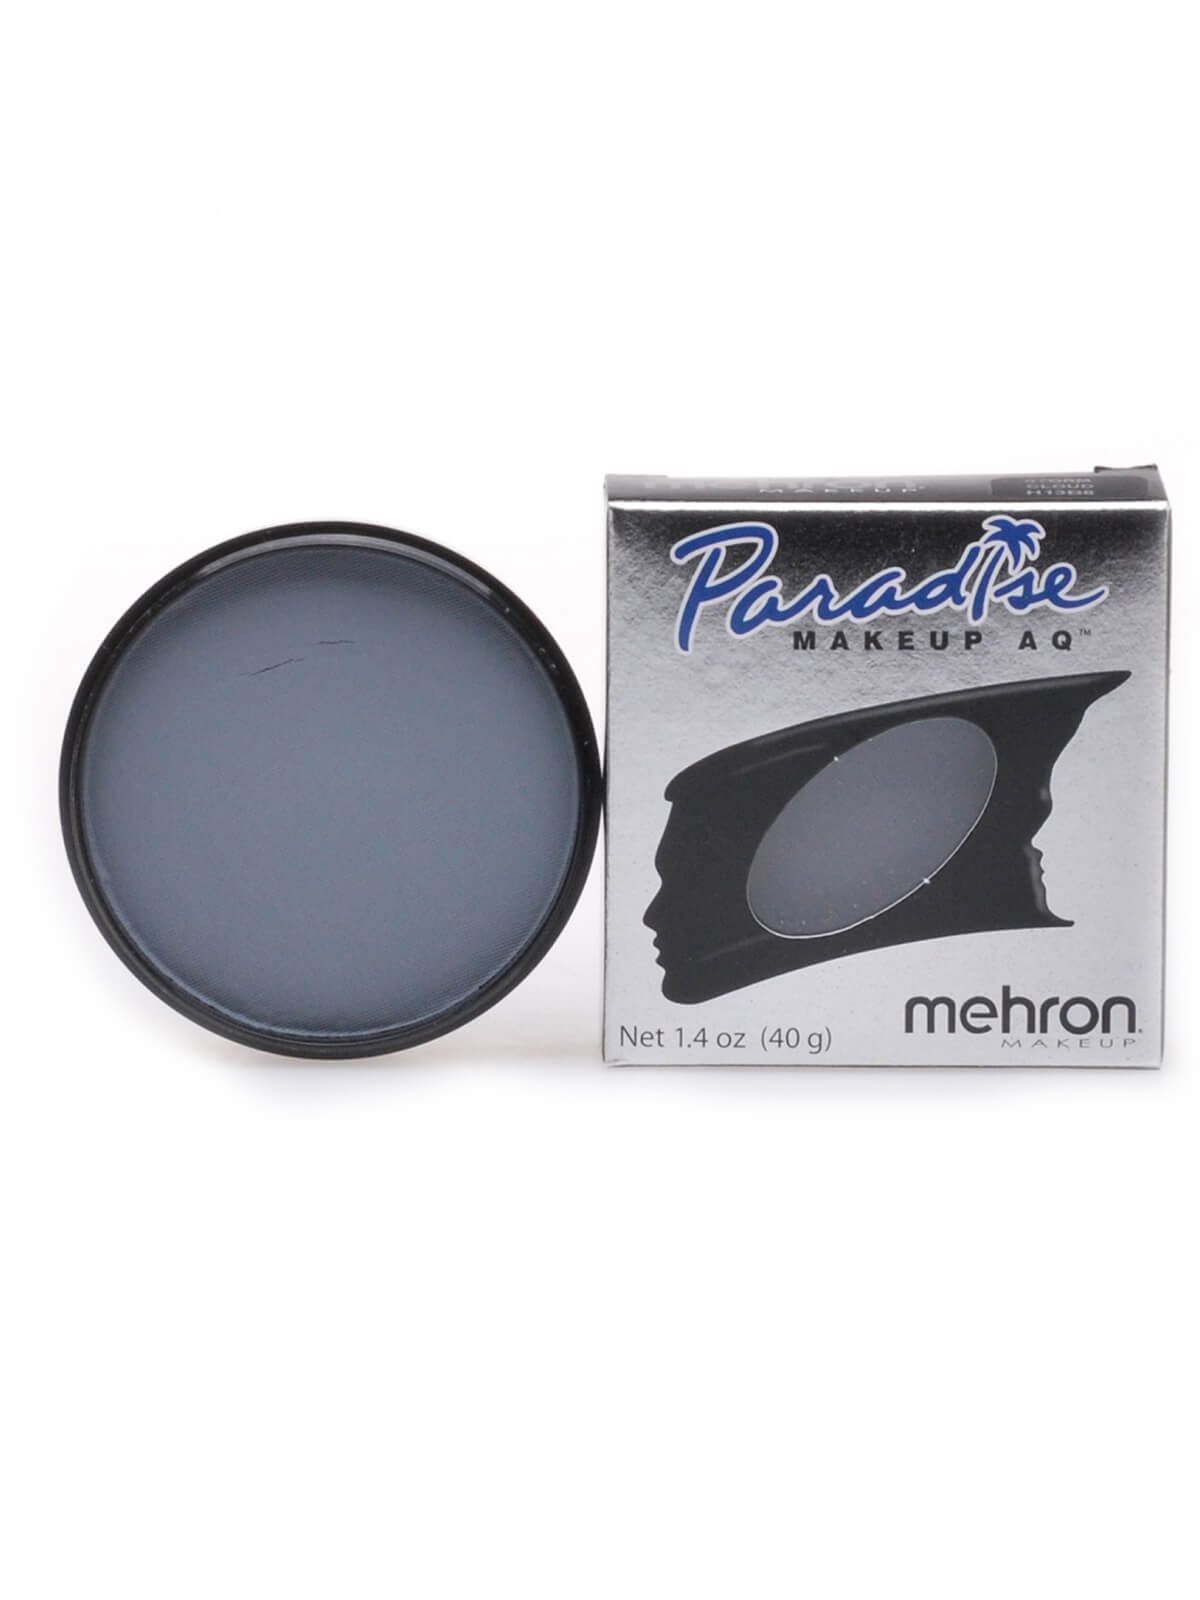 Mehron Paradise Makeup AQ - Tropical - Storm Cloud